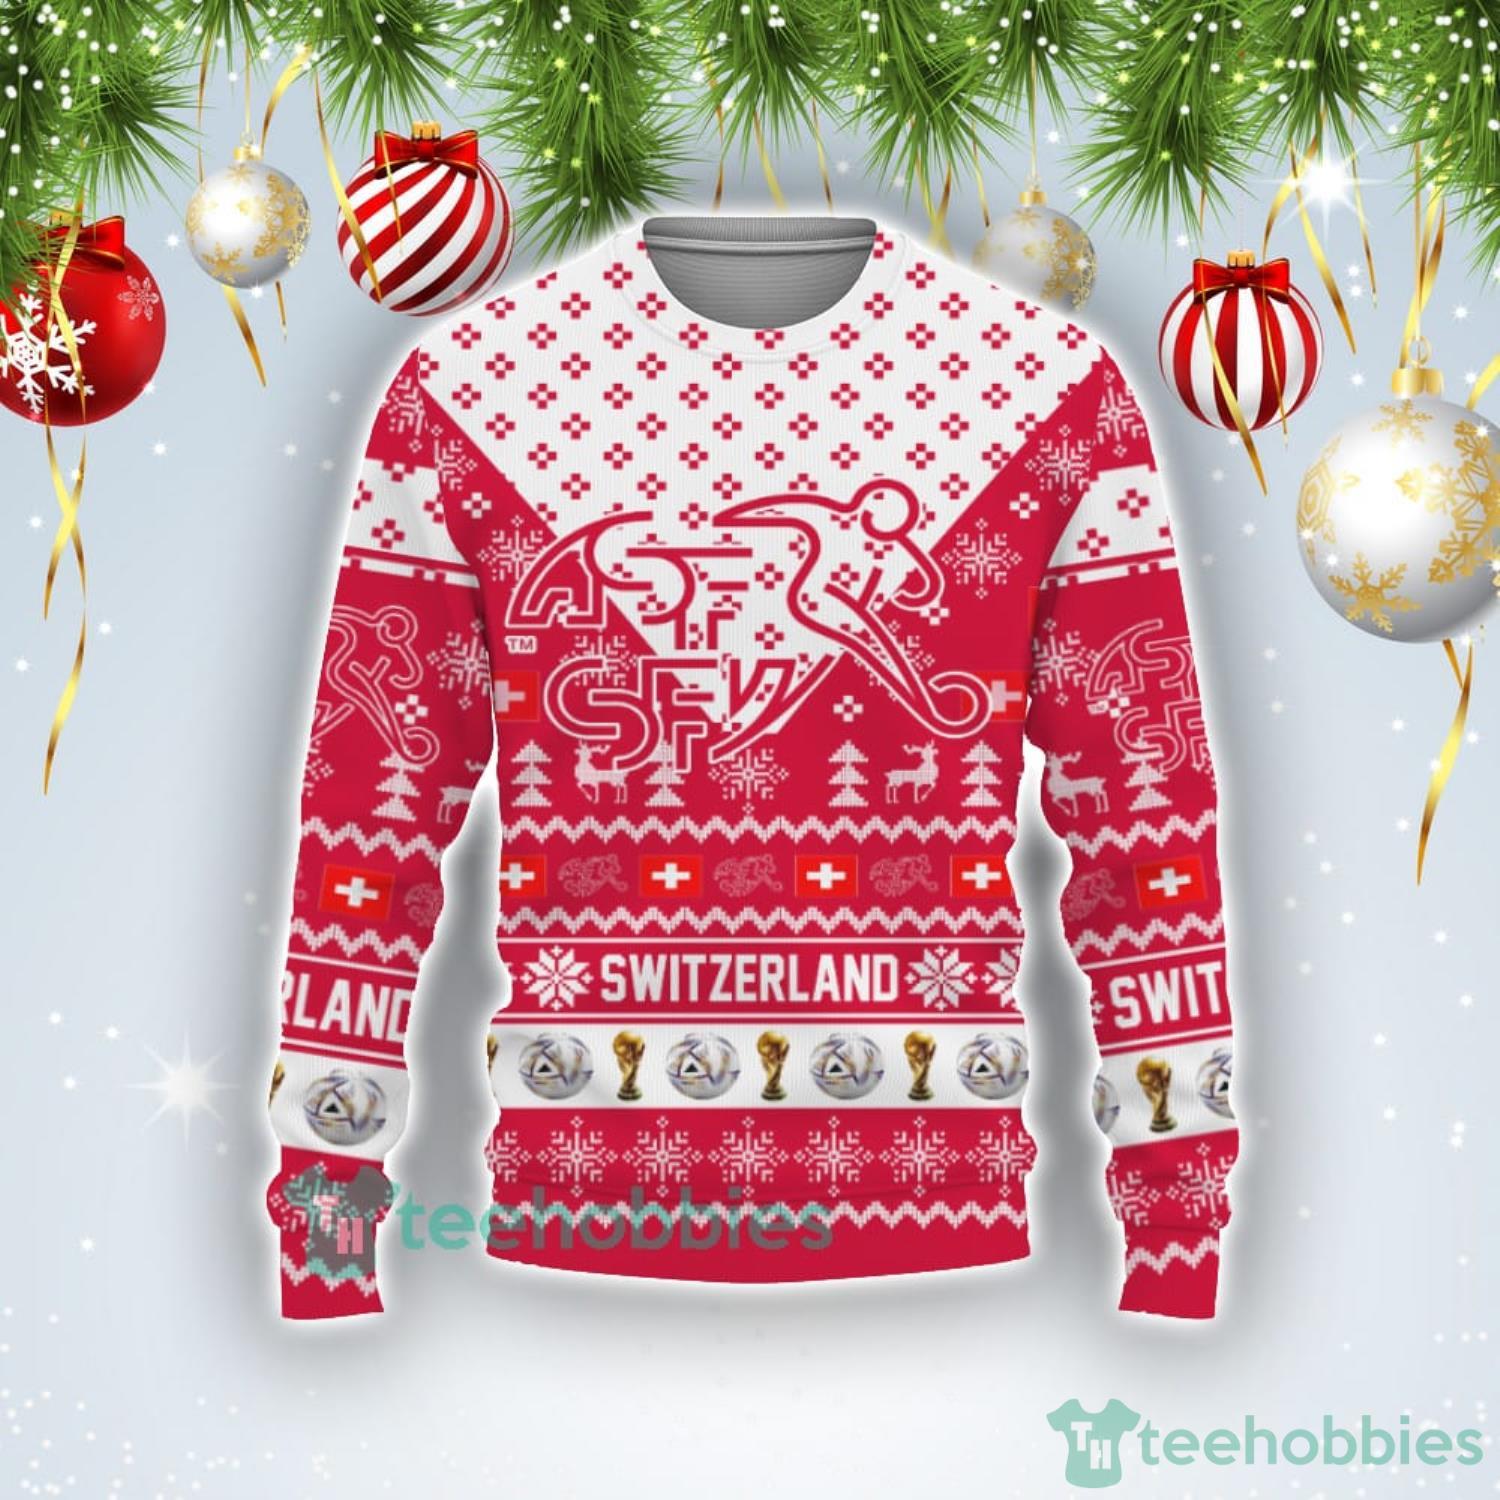 Switzerland Qatar Soccer Team World Cup 2022 Qatar Champions Football Gift Ugly Christmas Sweater Product Photo 1